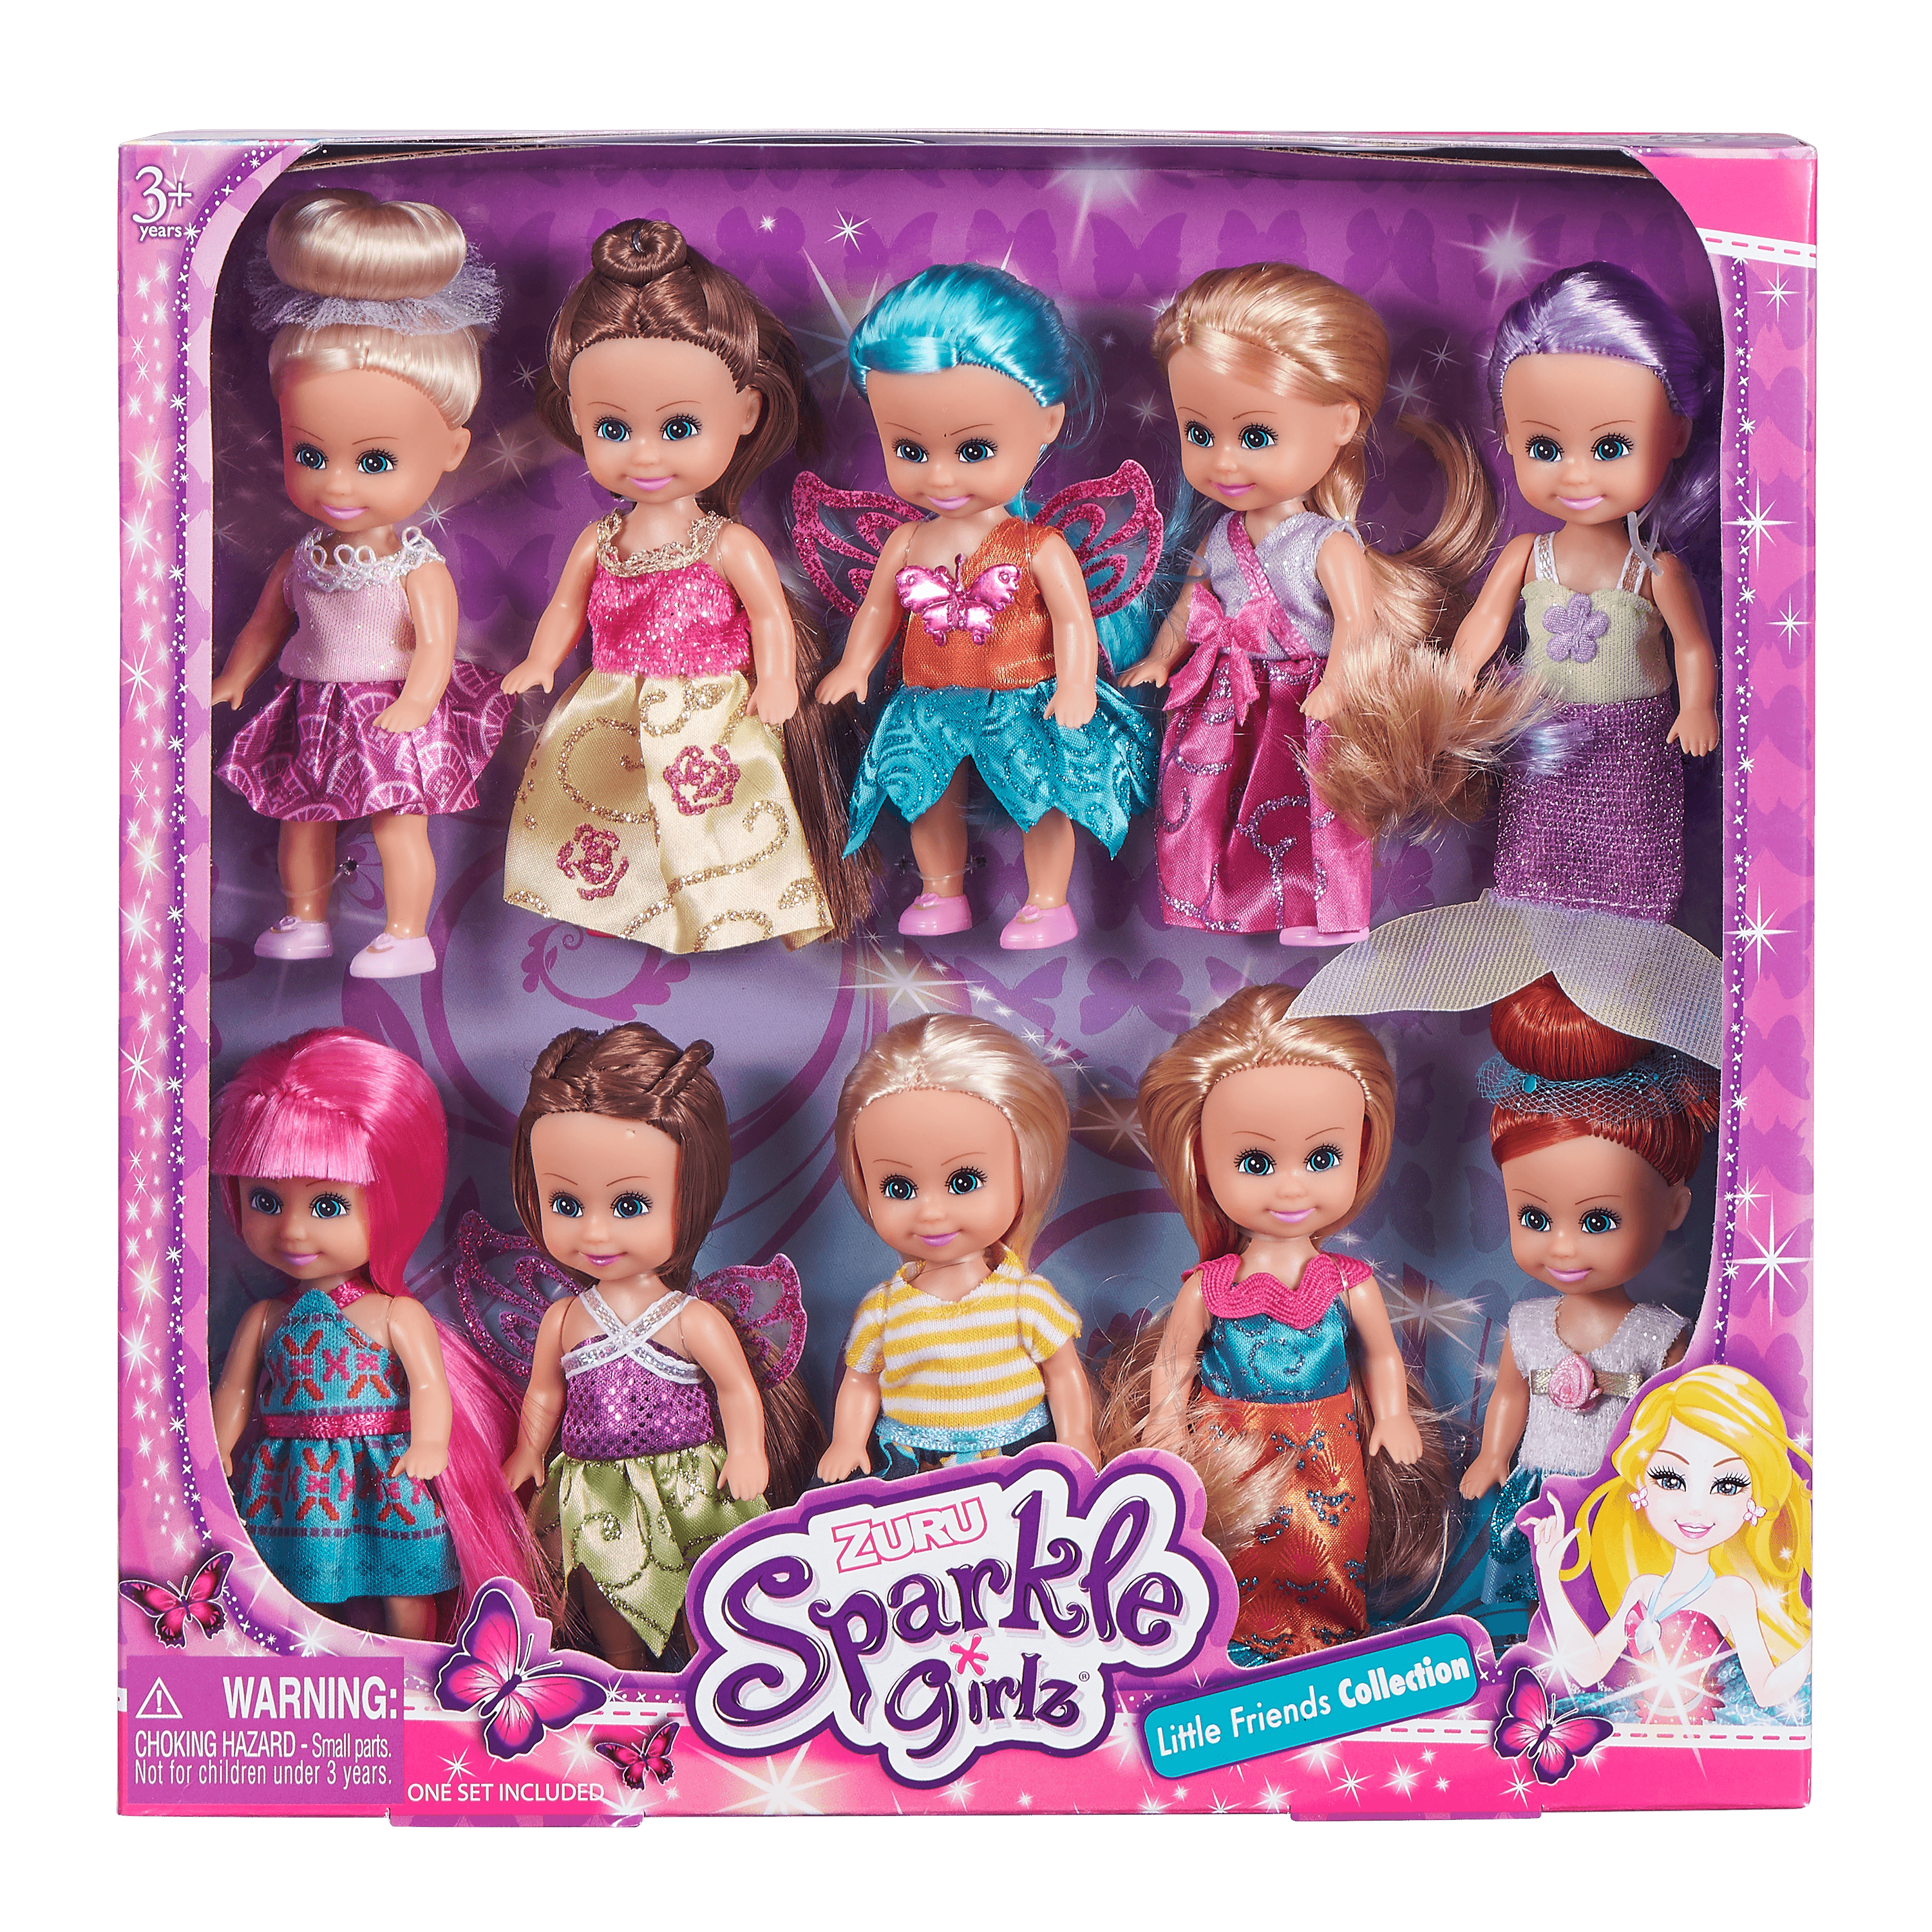 NEW Zuru Sparkle Girlz Little Friends Collection Set 10 Dolls Ages 3+ 